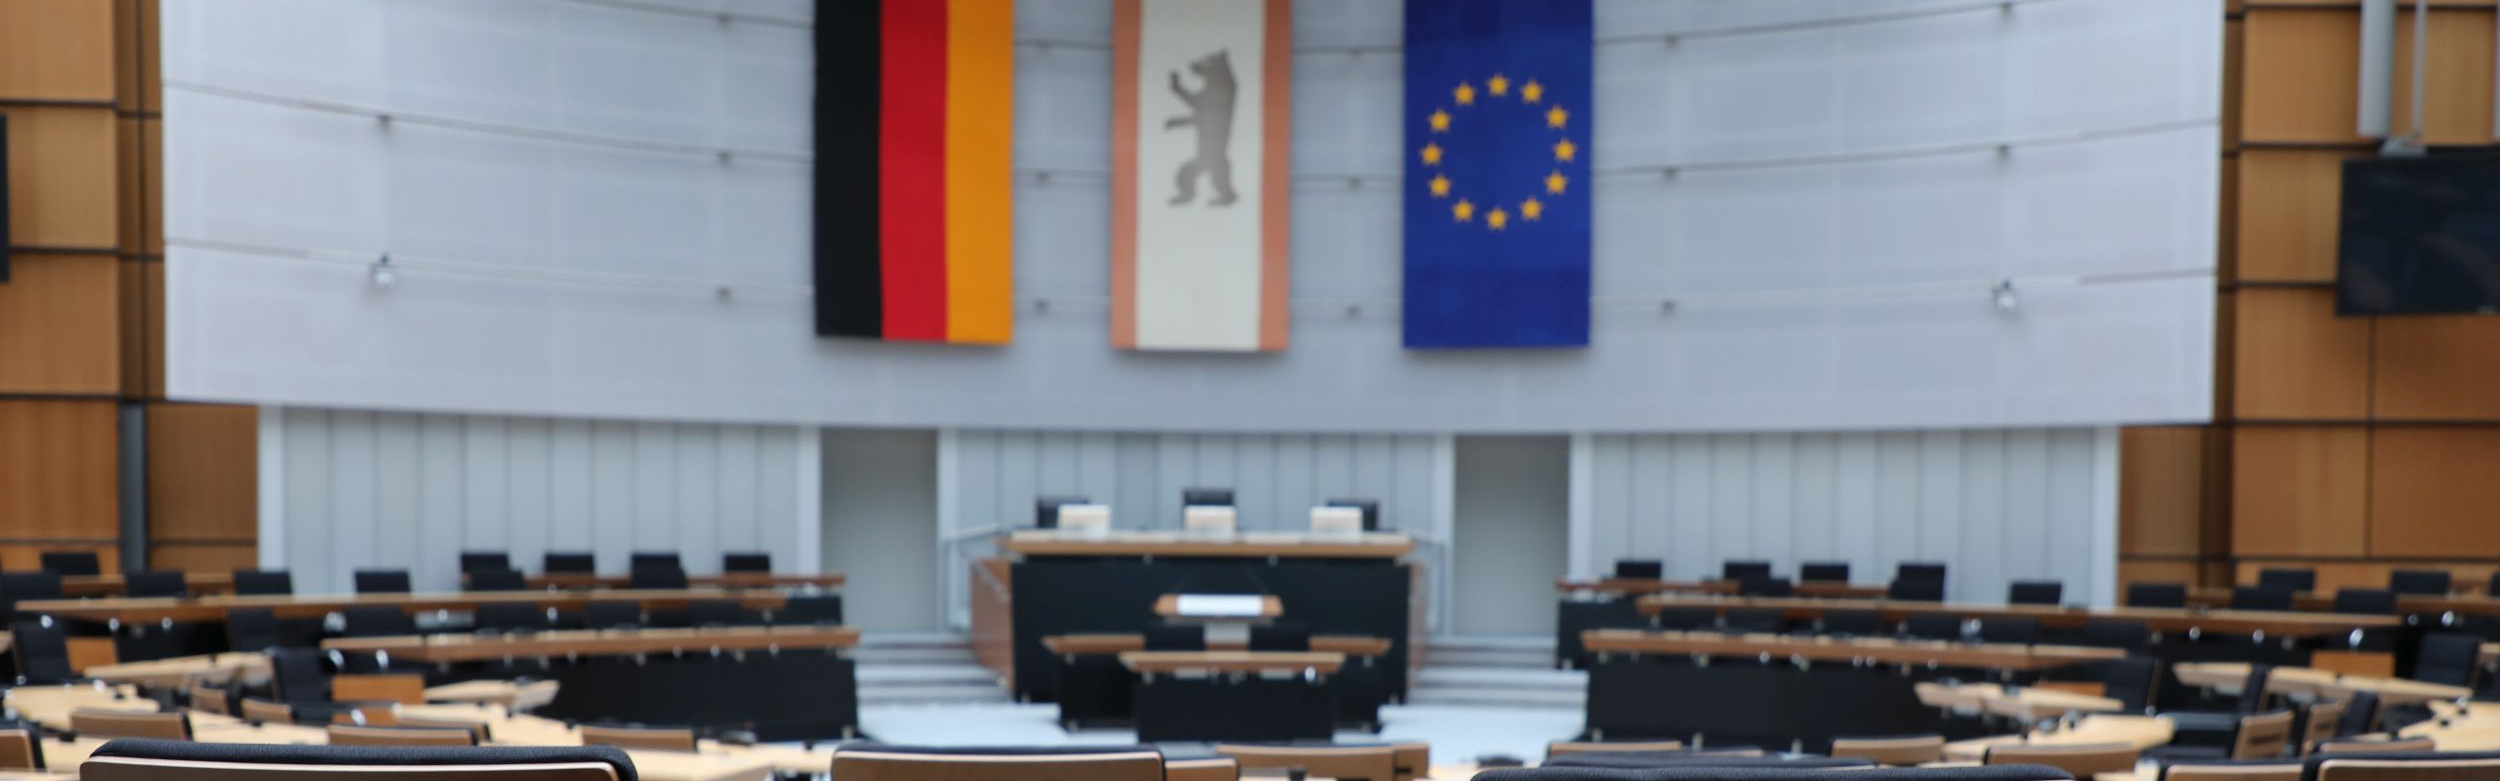 Der leere Plenarsaal des Berliner Abgeordnetenhauses